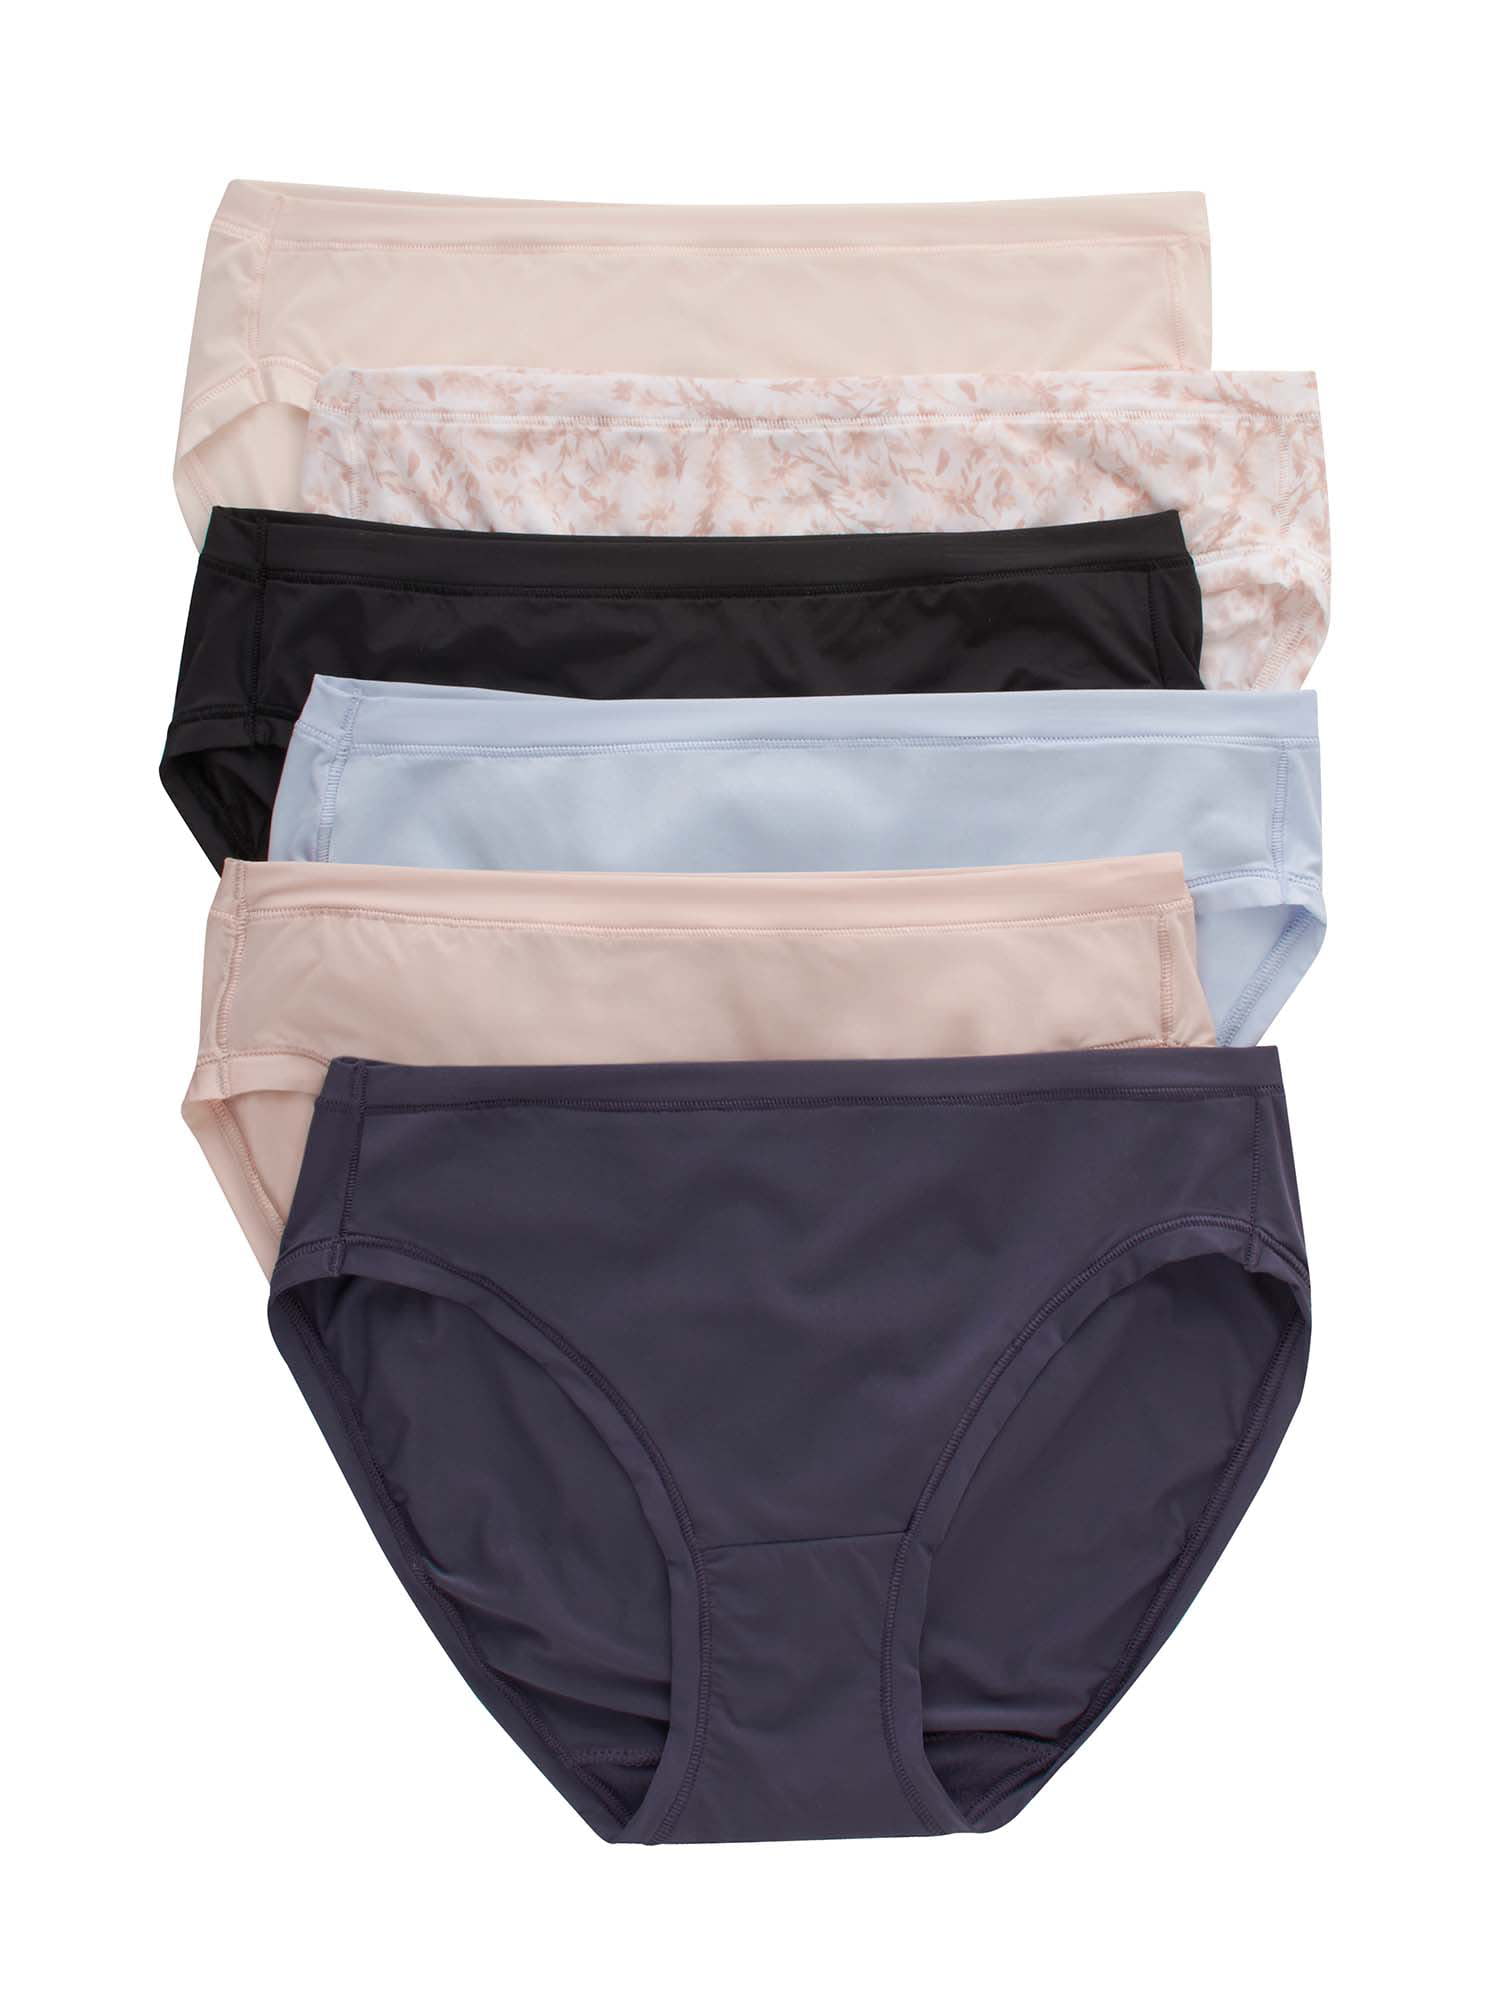 Hanes Women's Cotton Hi-Cut Underwear, 6-Pack - DroneUp Delivery